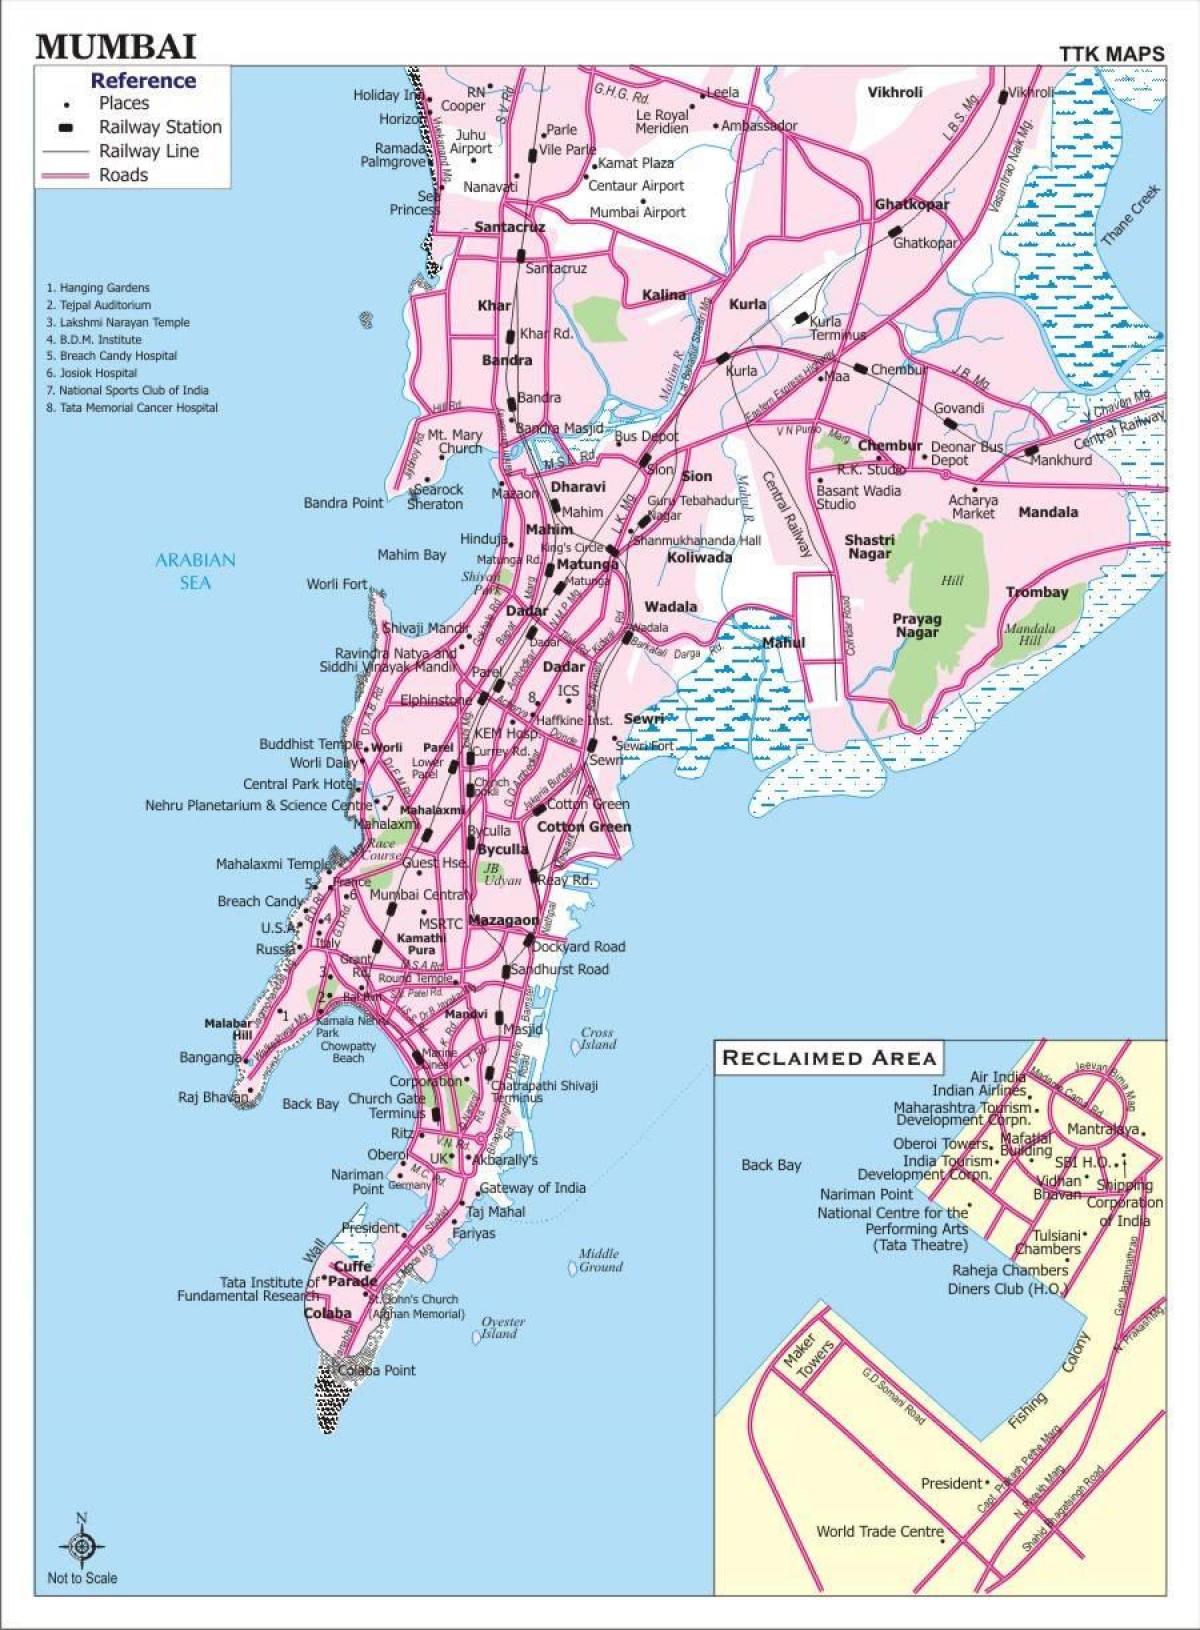 Plan des transports publics de Mumbai - Bombay